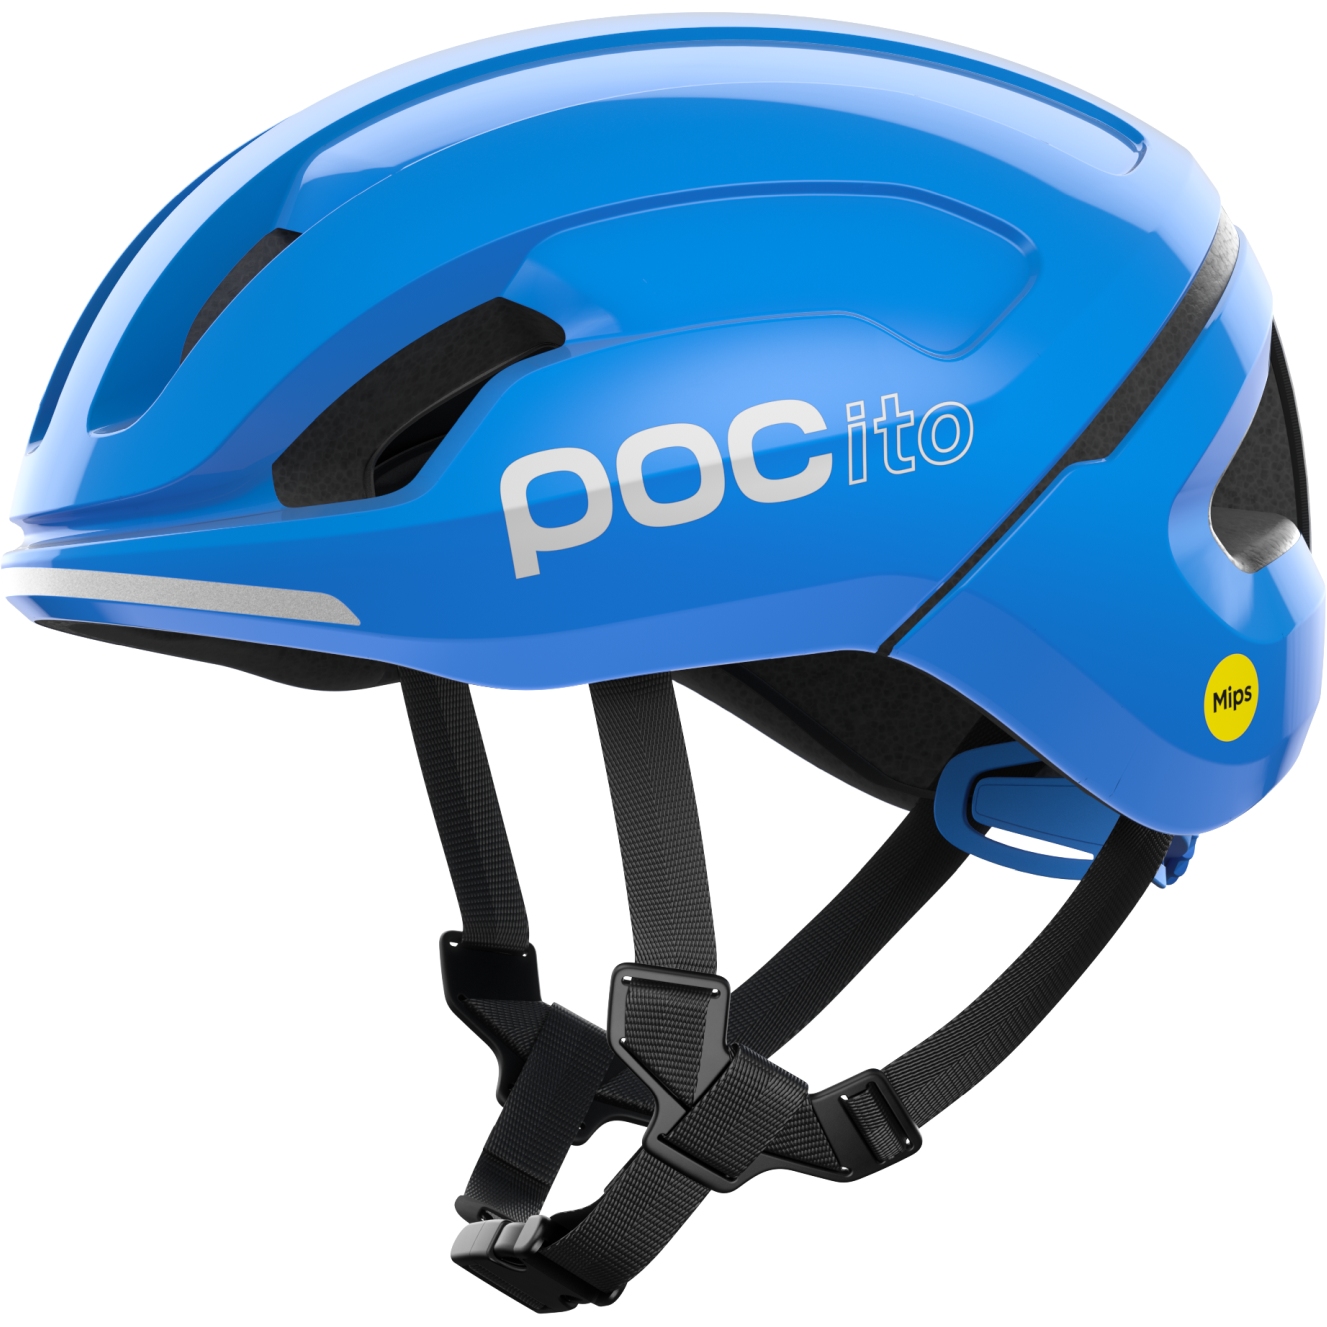 Productfoto van POC Pocito Omne MIPS Kinder-Fietshelm - 8233 fluorescent blue